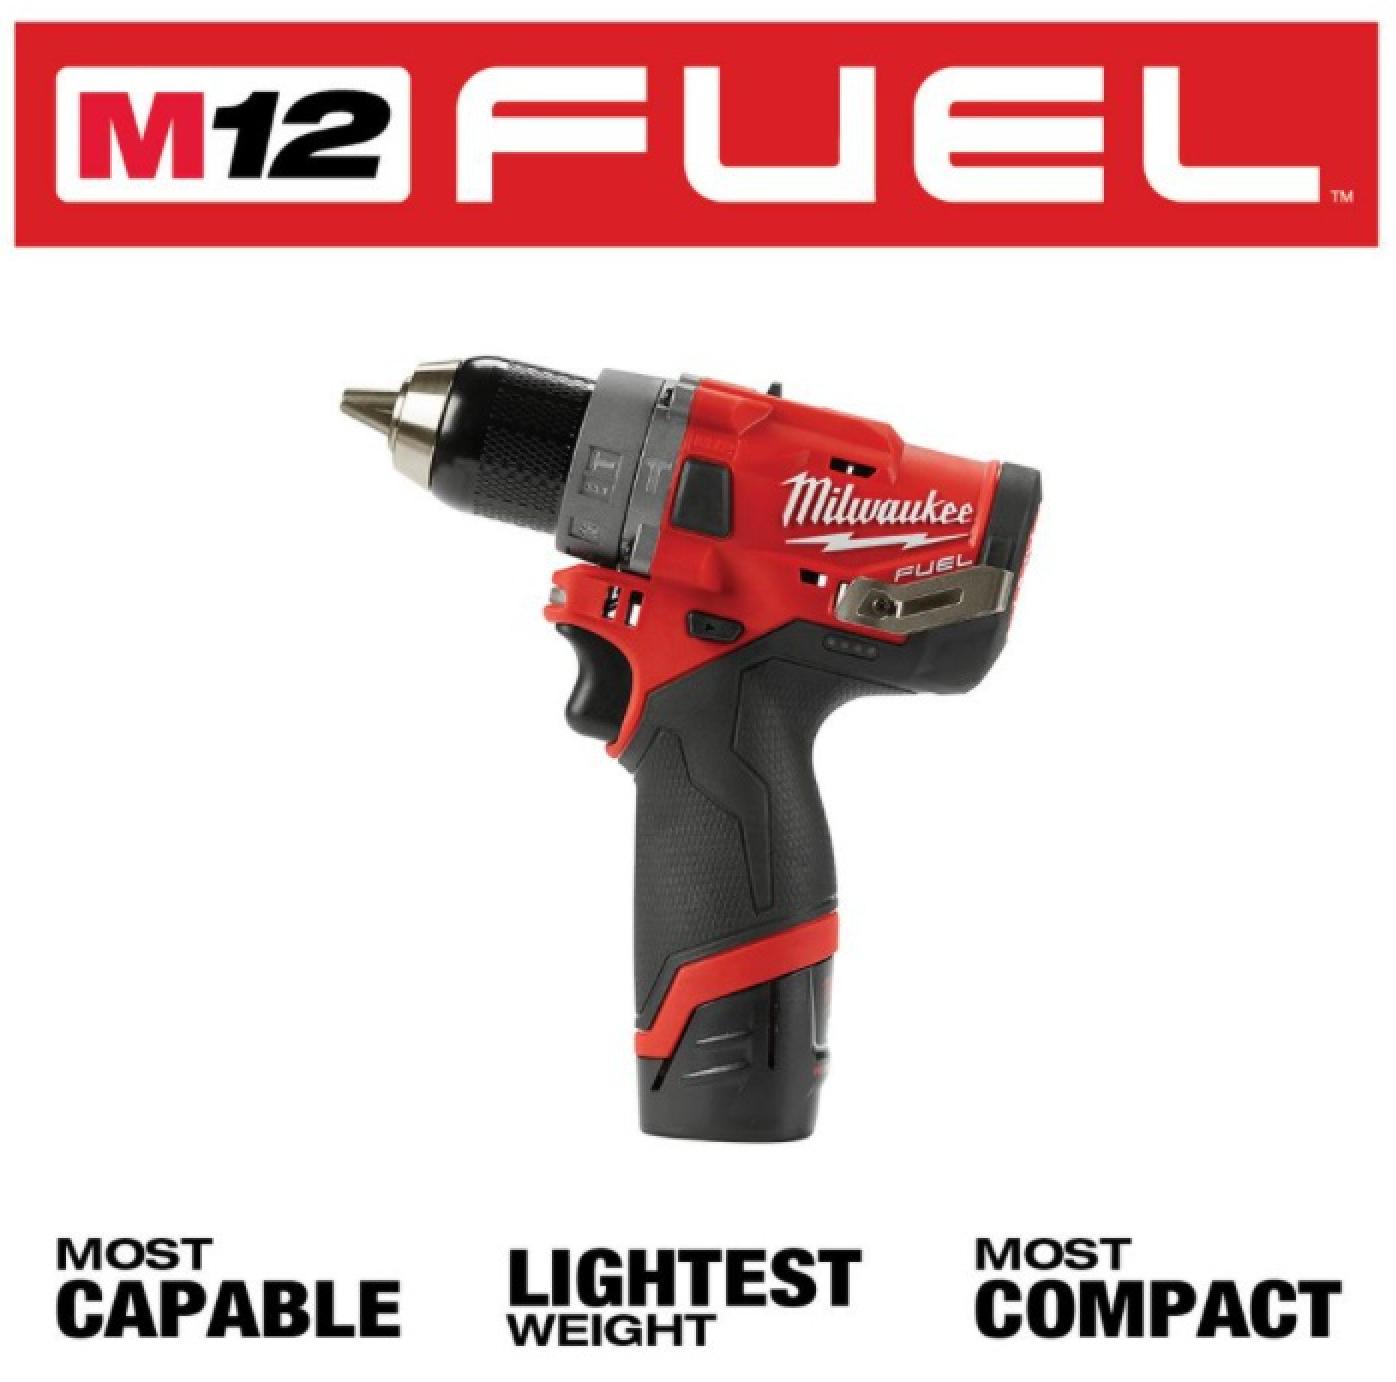 Milwaukee M12 FUEL™ drill